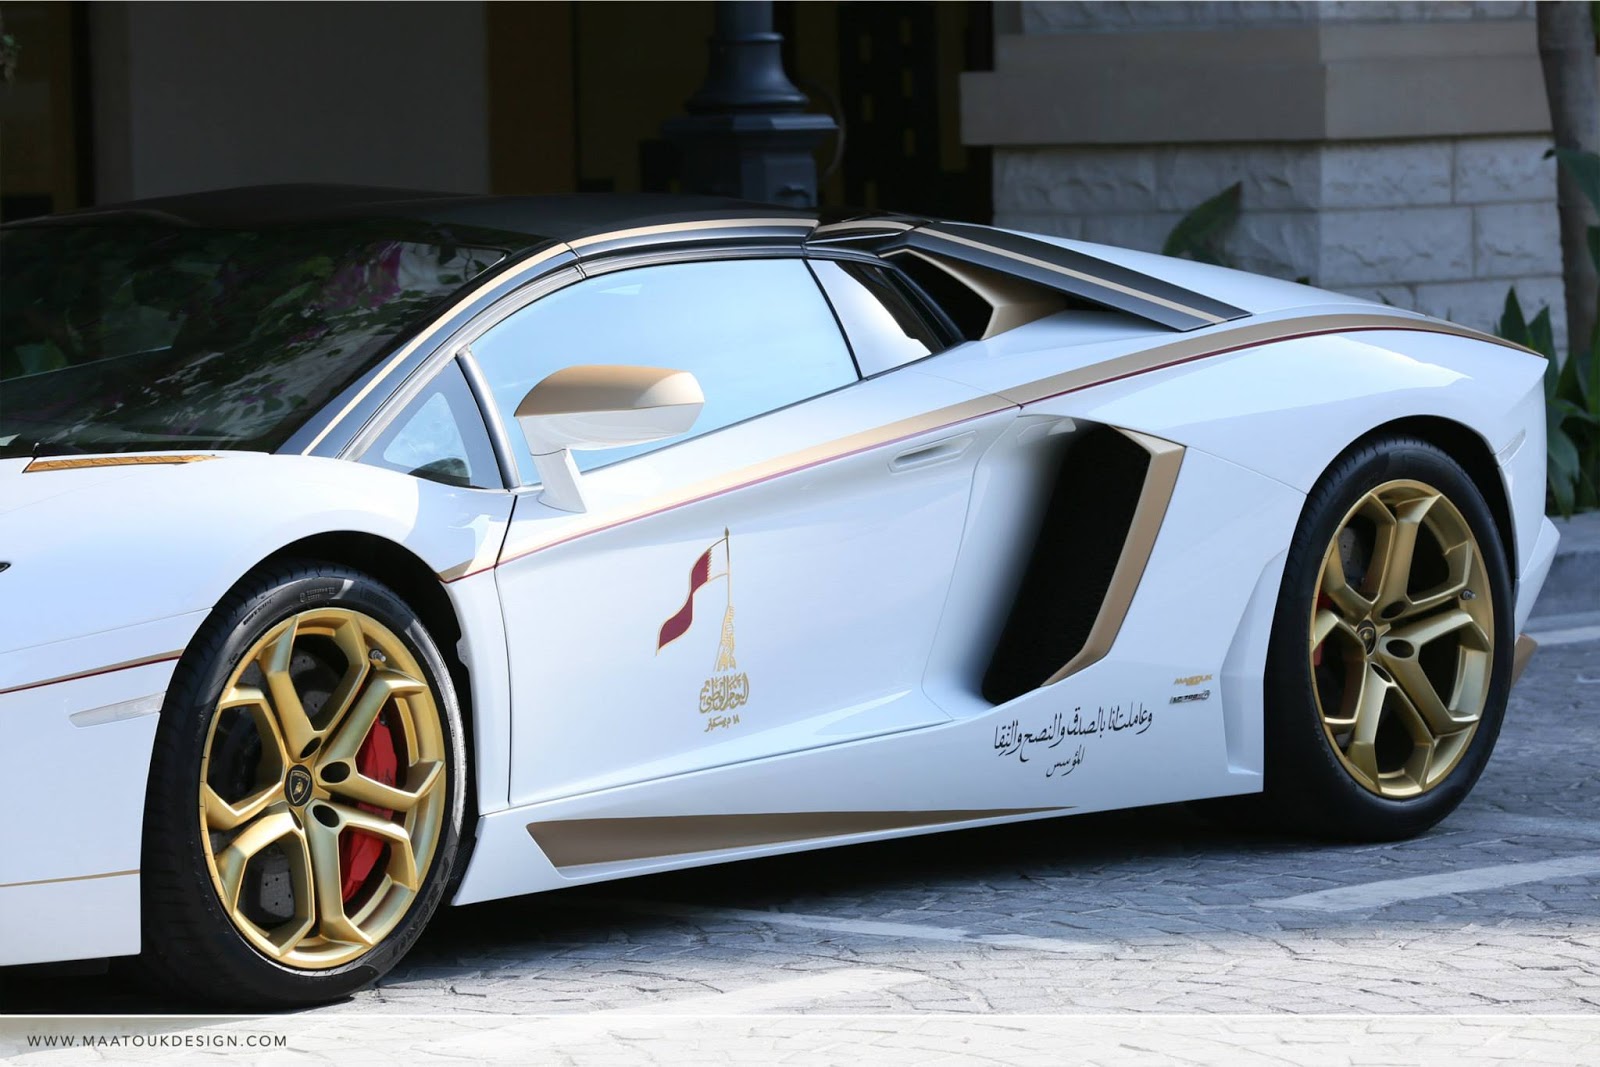 Meet the one-off gold plated Lamborghini Aventador Roadster Qatar